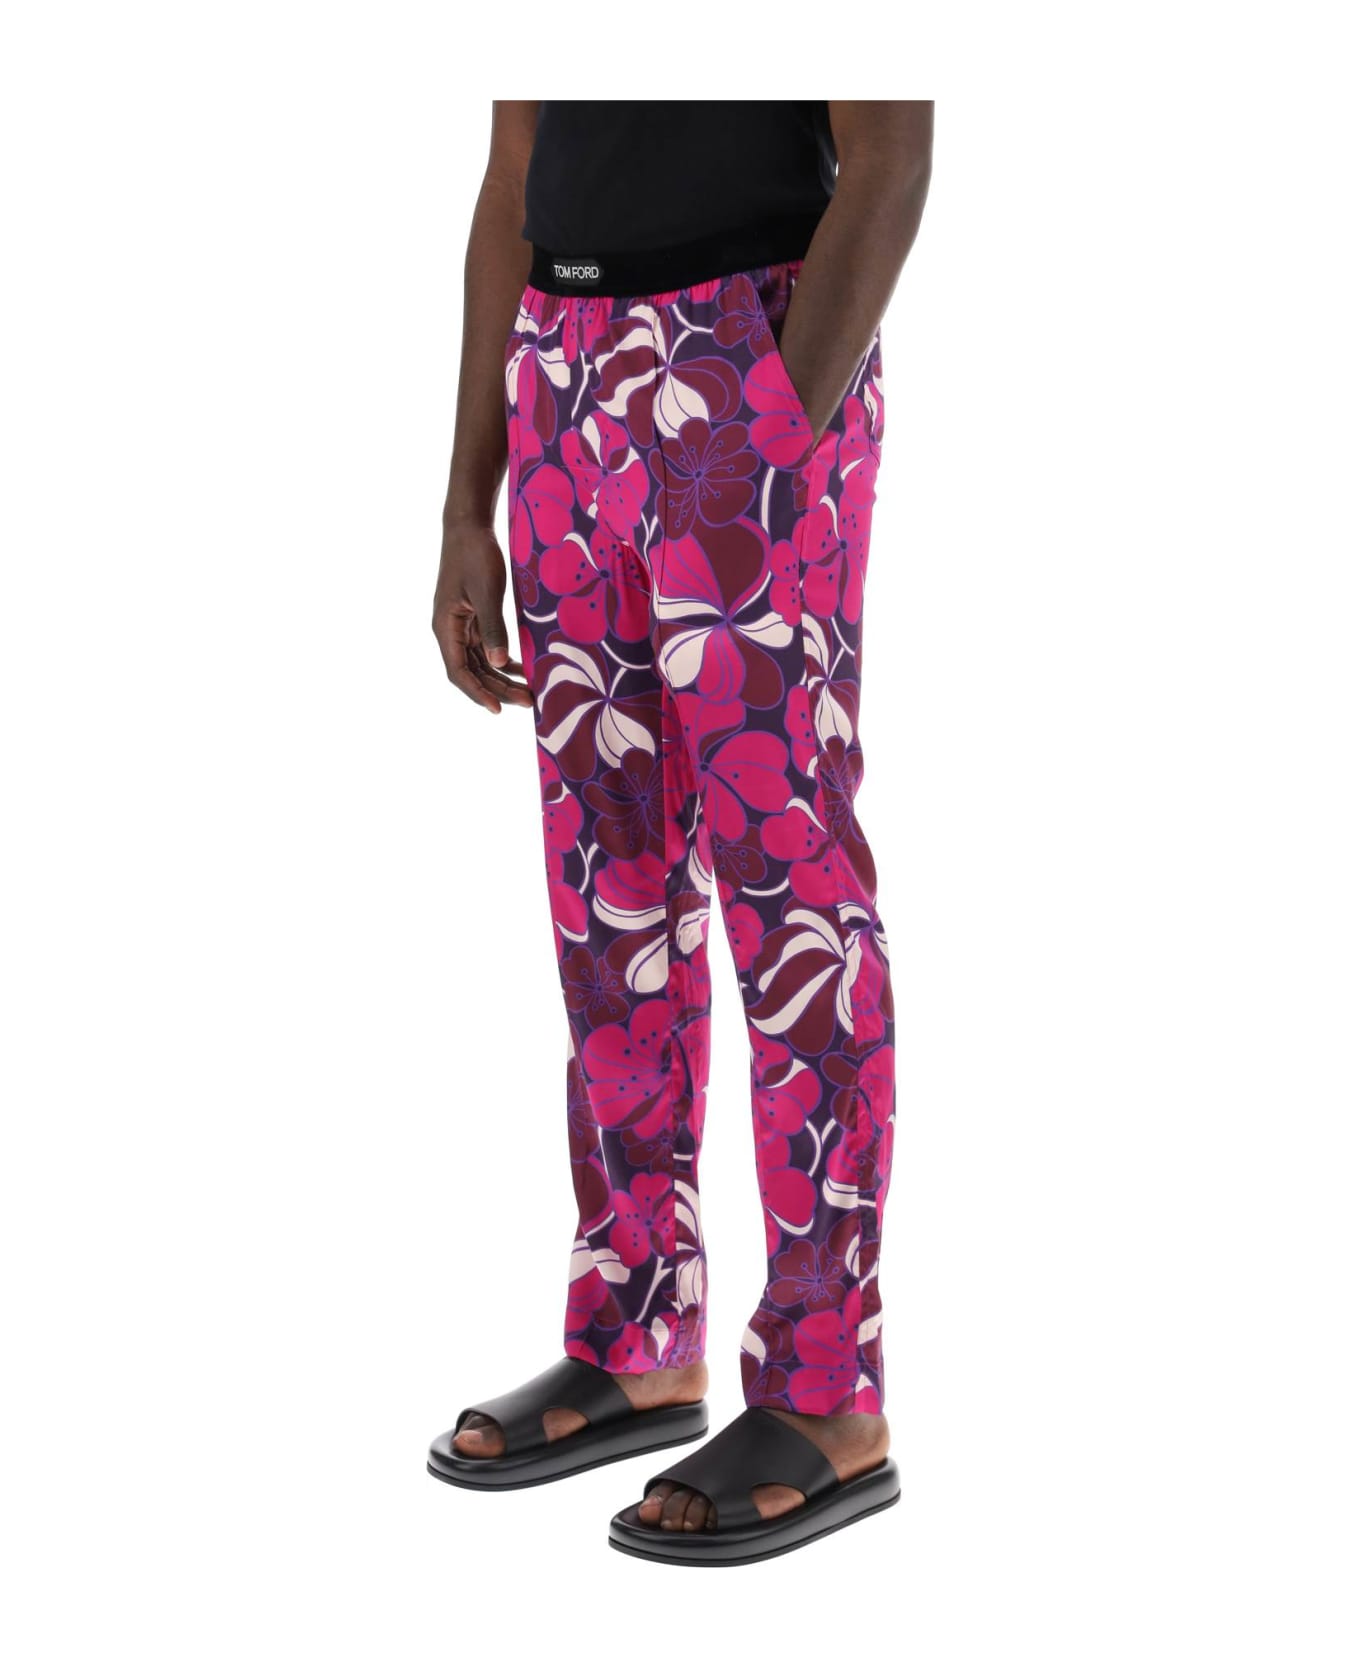 Tom Ford Pajama Pants In Floral Silk - ROSA BRILLANTE FANTASIA (Purple)